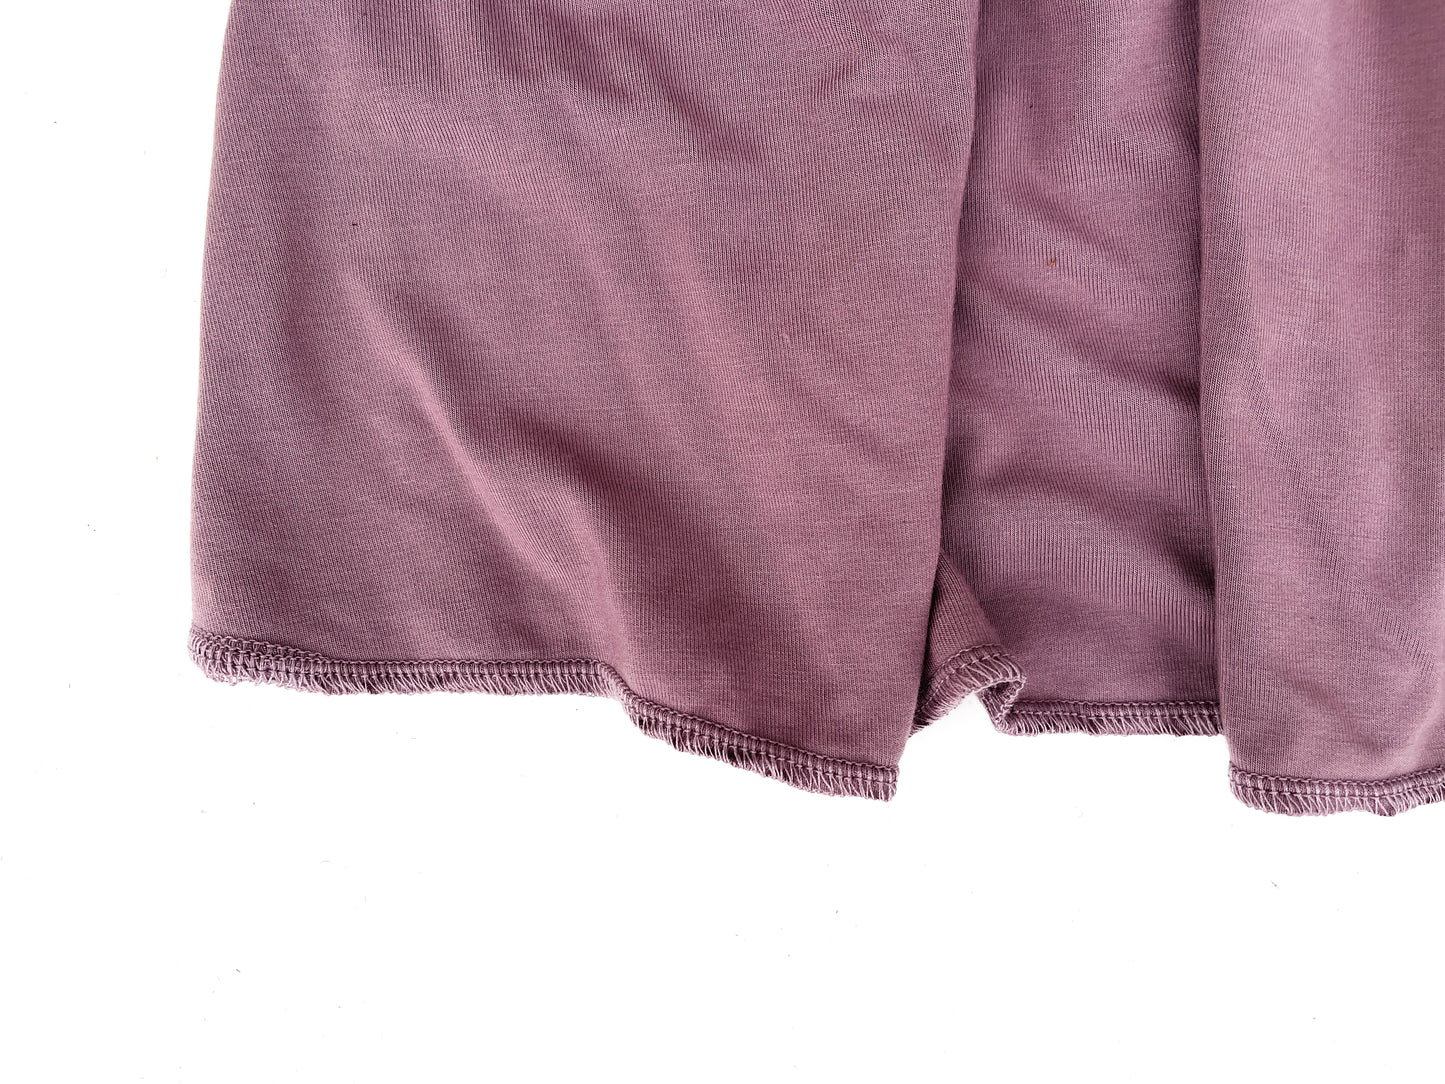 Peplum Dress | Lavender - One Kind Clothing, LLC